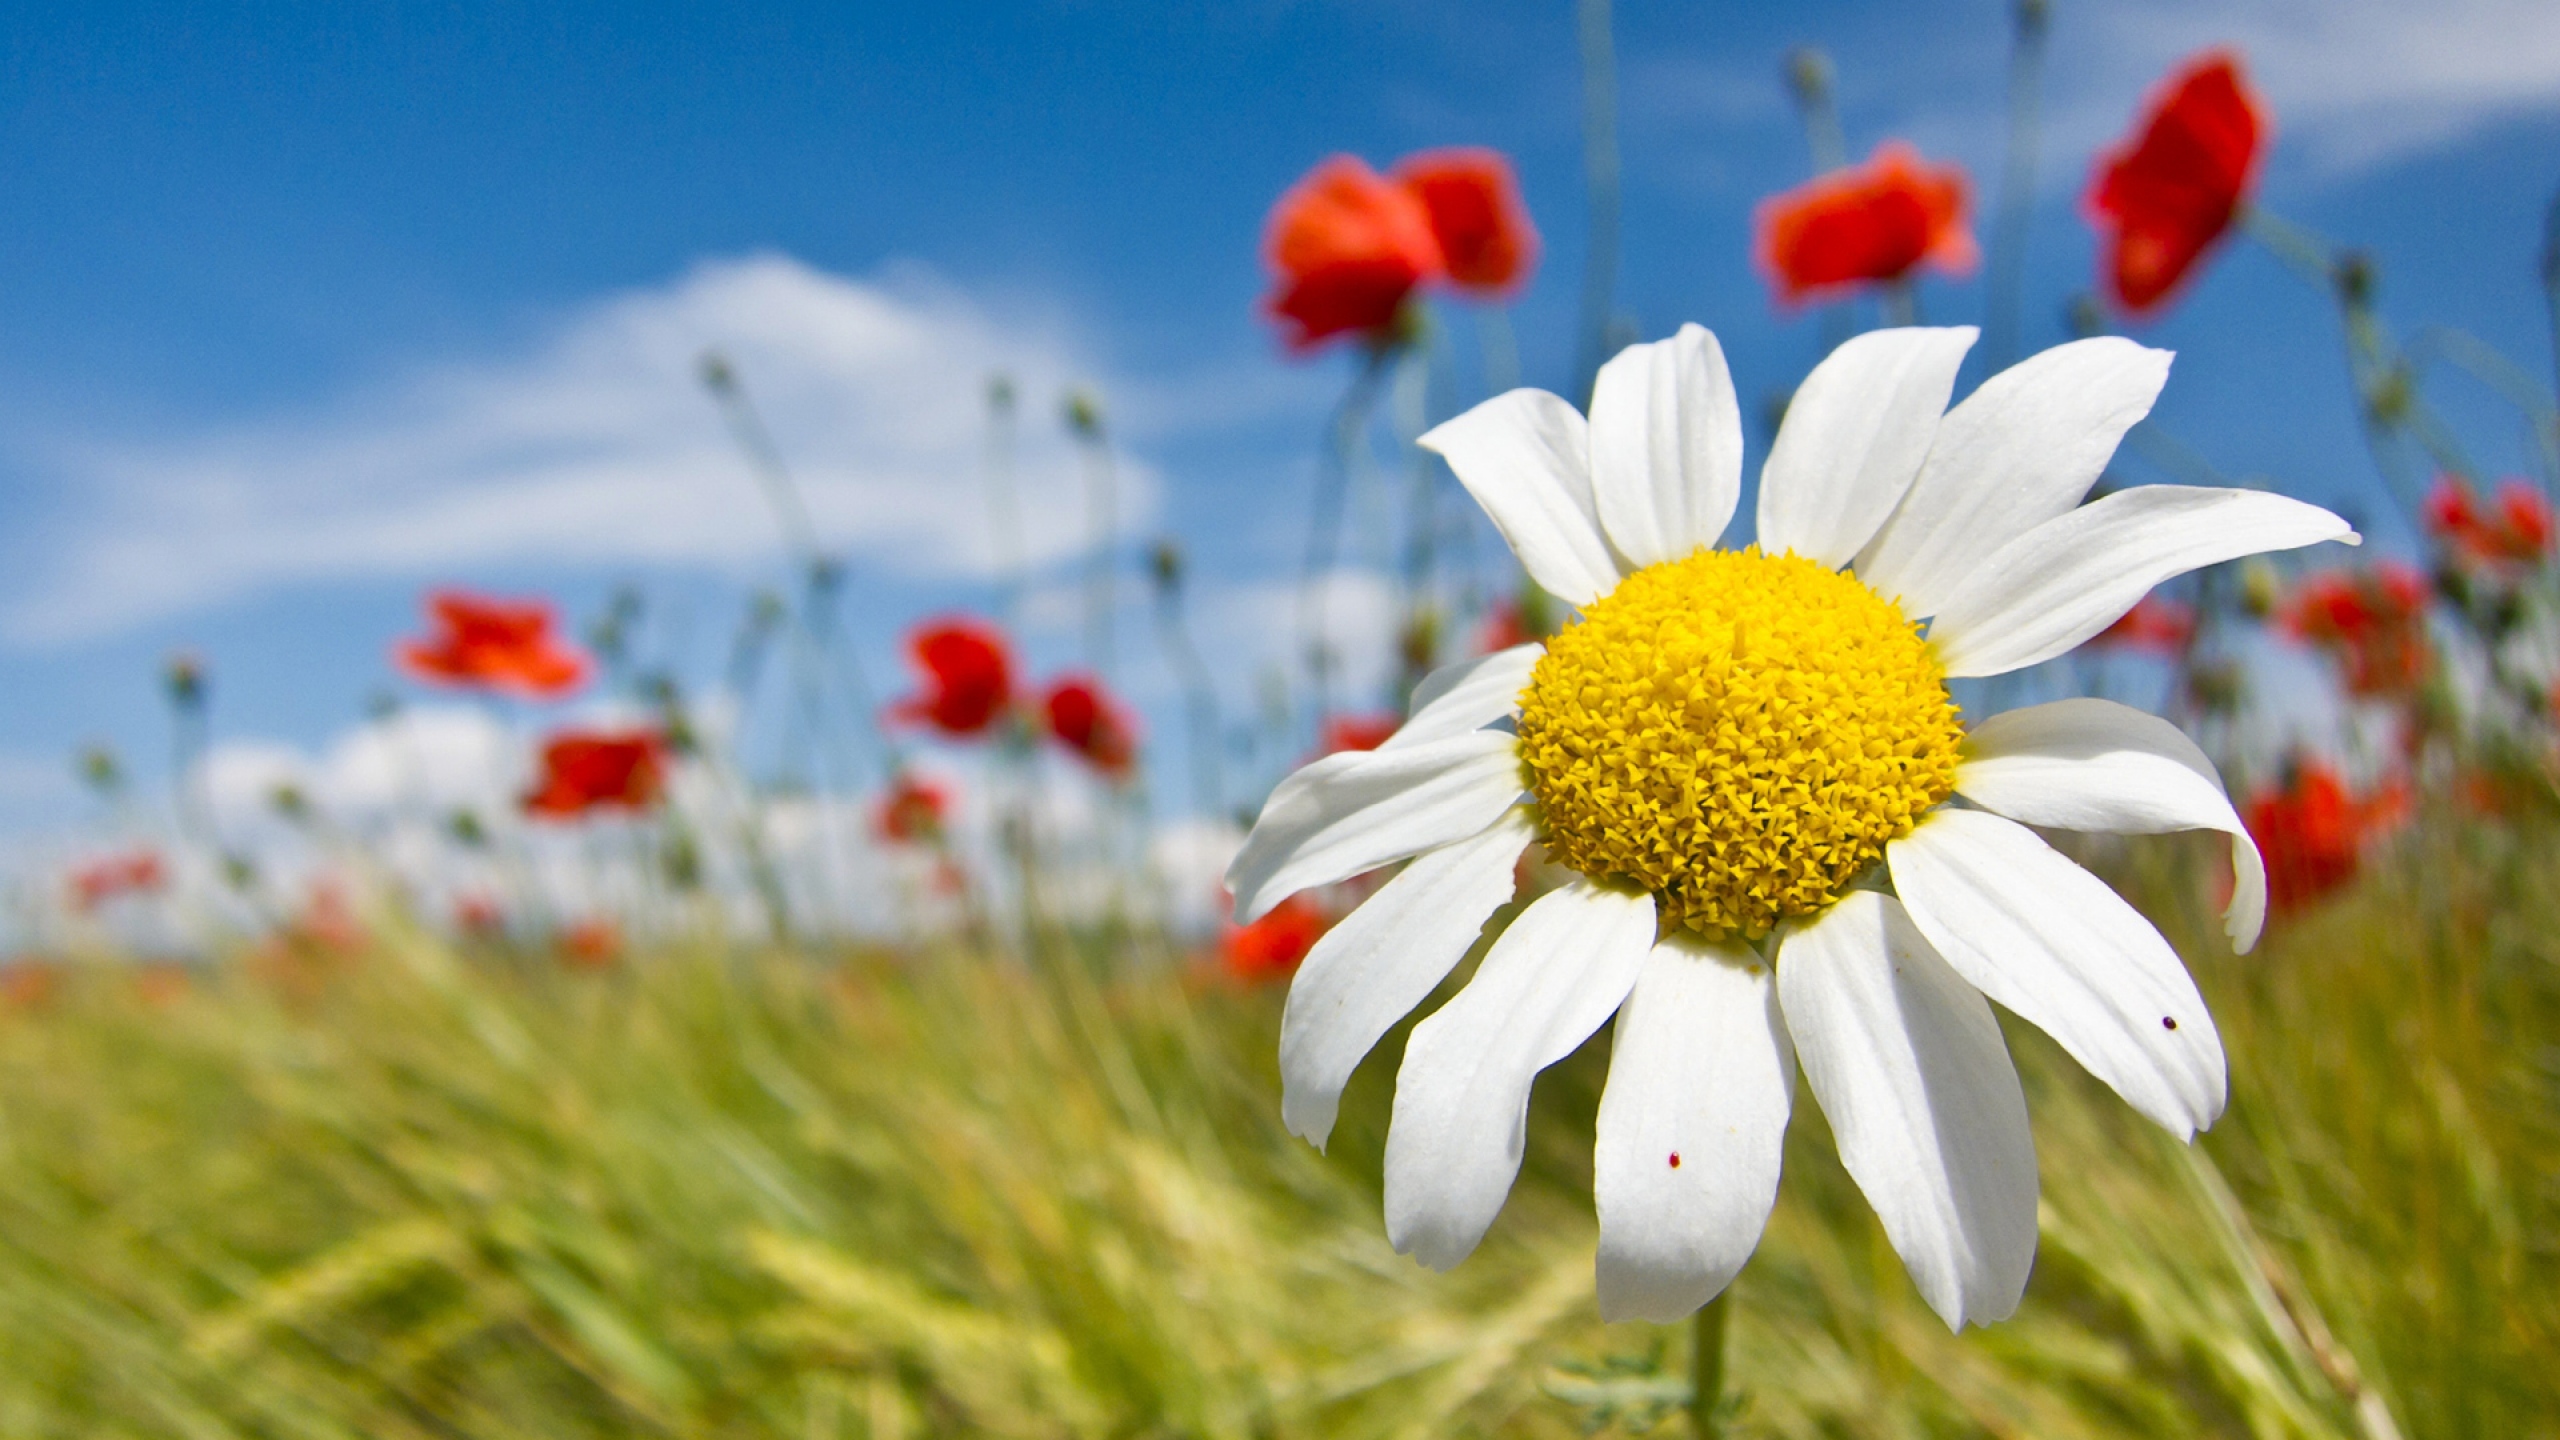 Download Wallpaper 2560x1440 Daisy, Flowers, Field, Summer, Sky